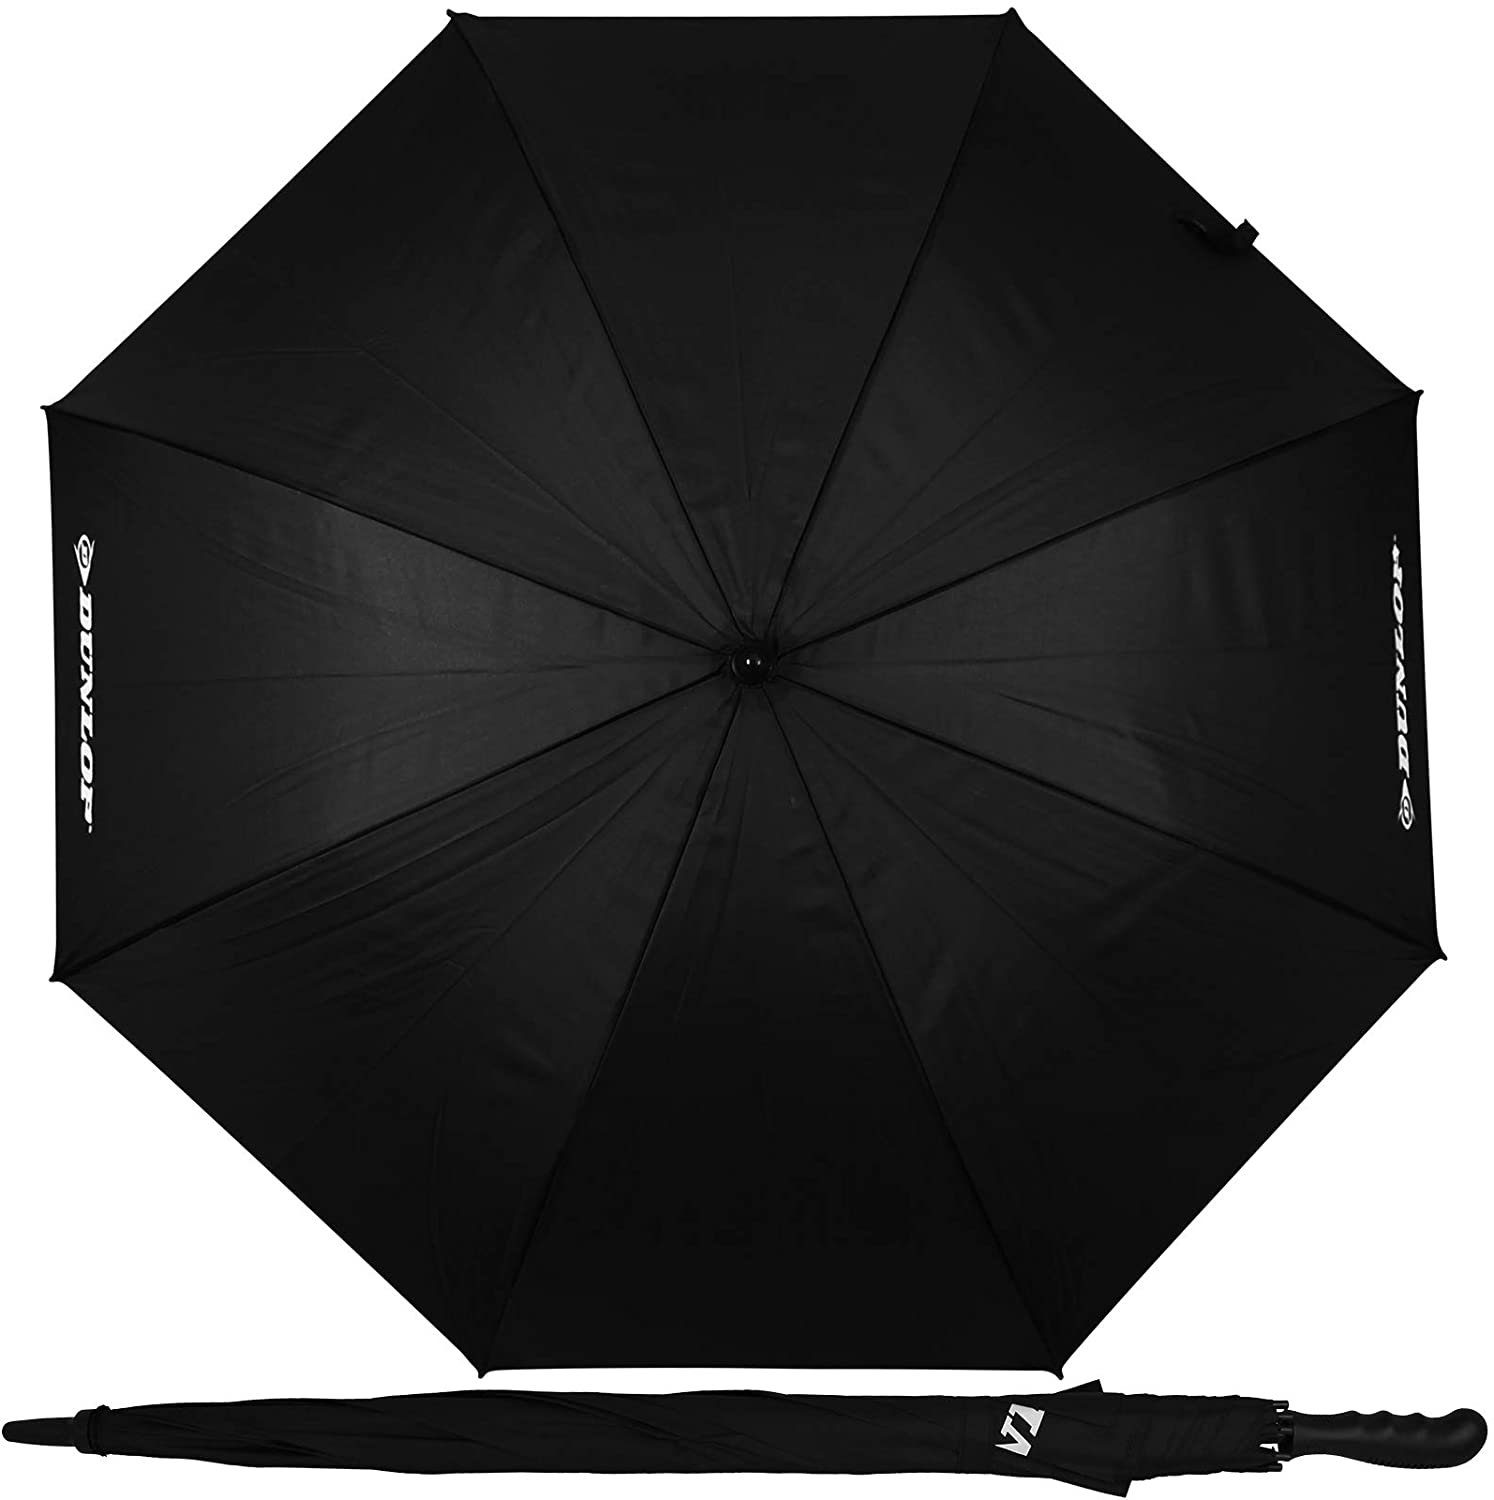 Dokado Partnerschirm XXL Paar Regenschirm Personen Stockschirm Farbwahl Doppelregenschirm für Familienschirm Partnerschirm 130cm mit 2 Dunlop grün